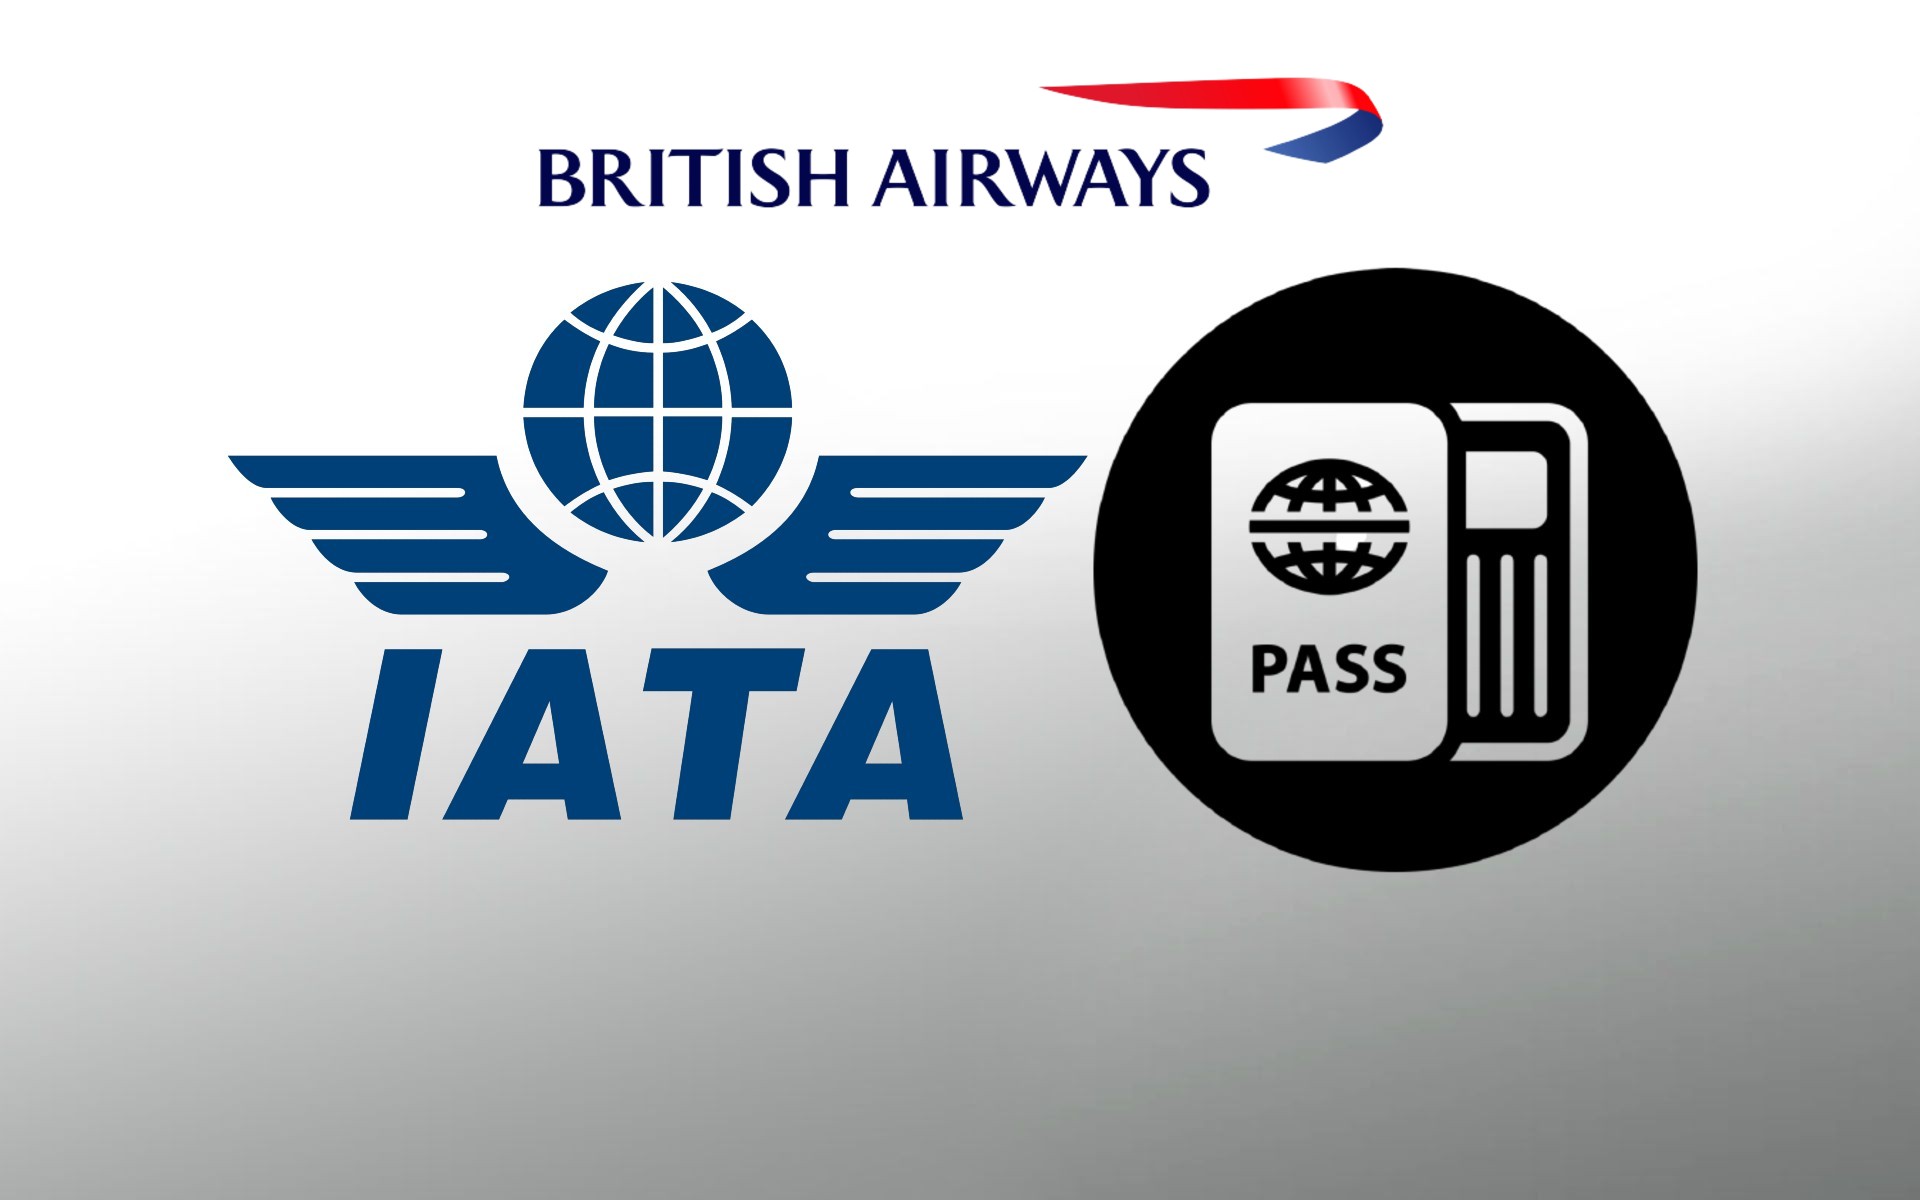 IATA and British Airways logos, Travel Pass illustration